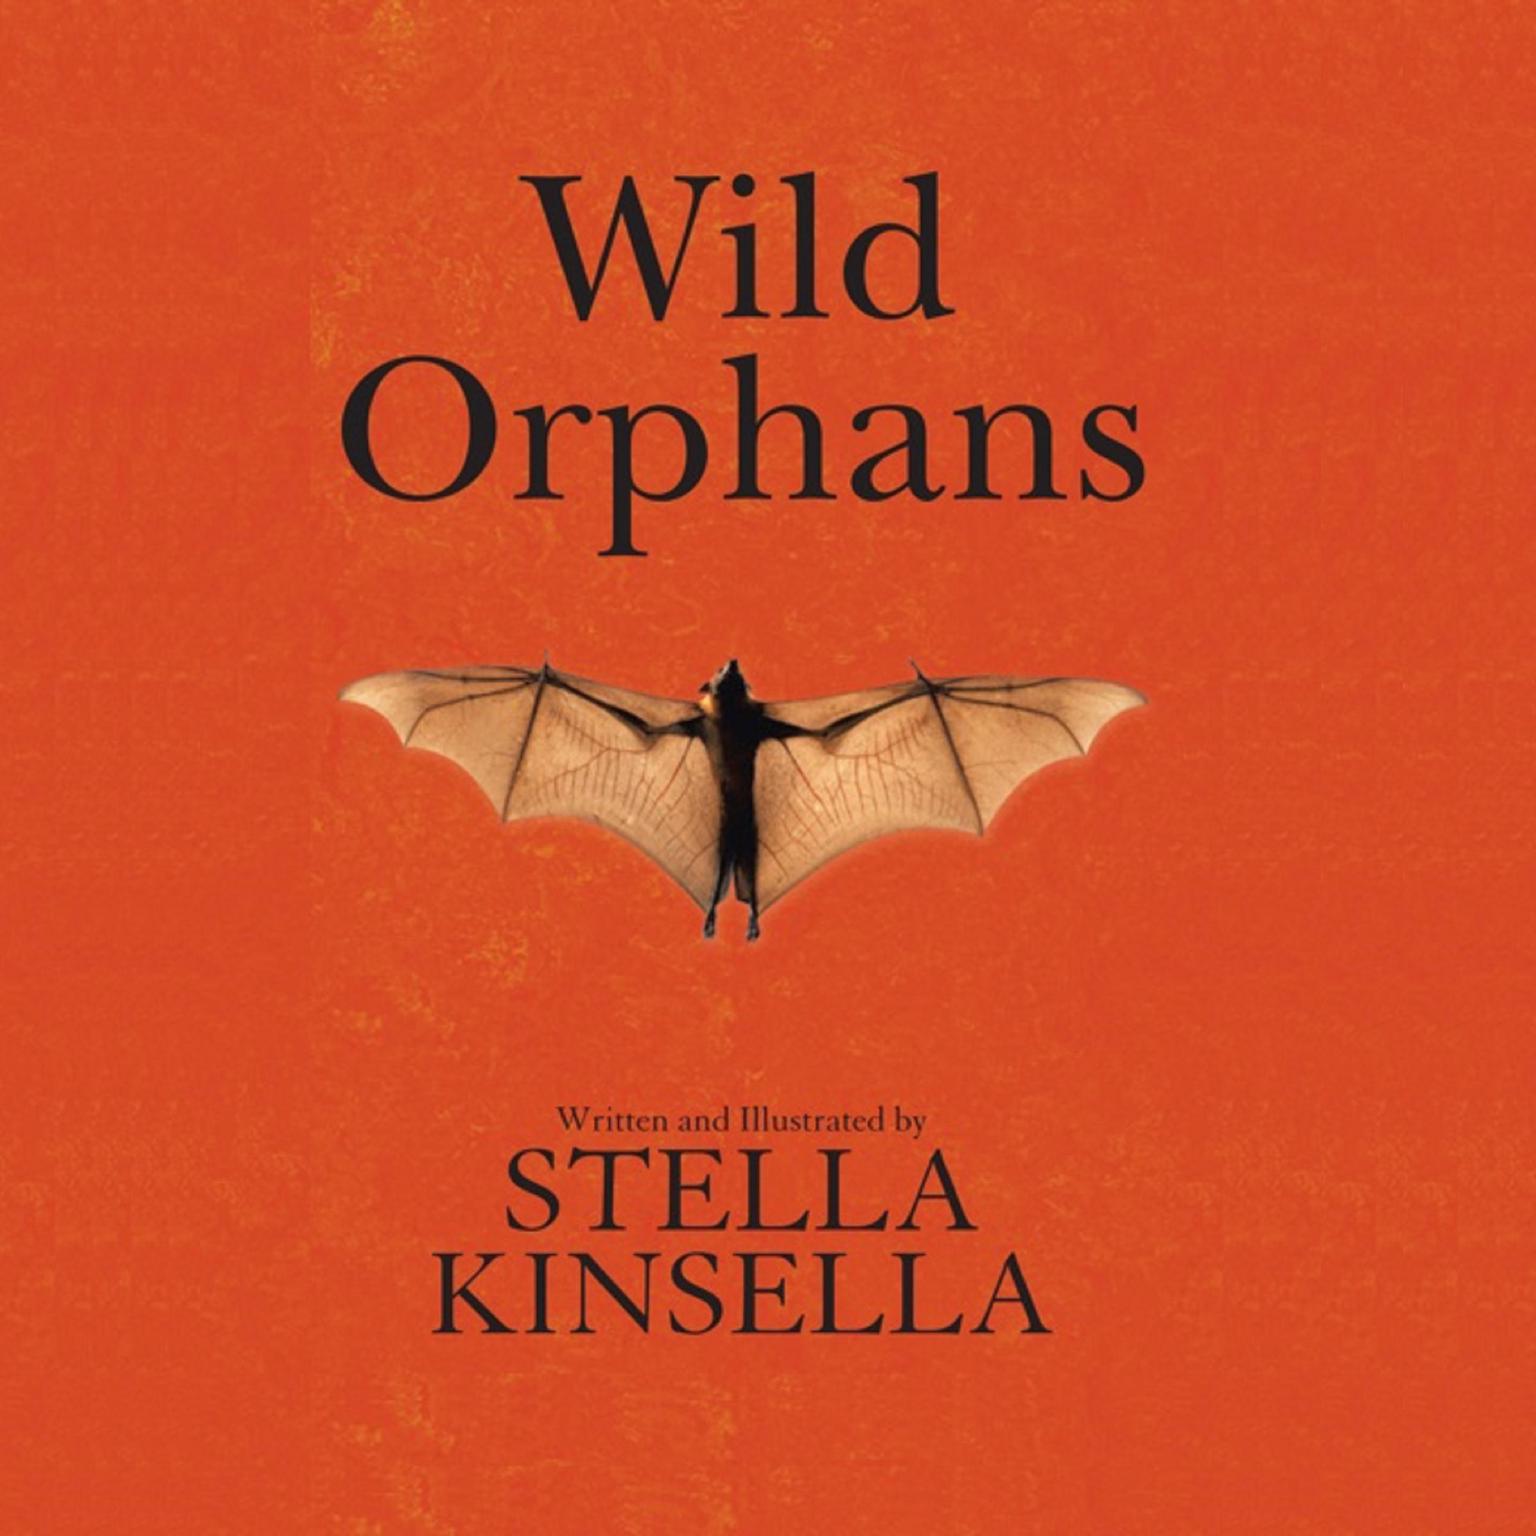 Wild Orphans Audiobook, by Stella Kinsella